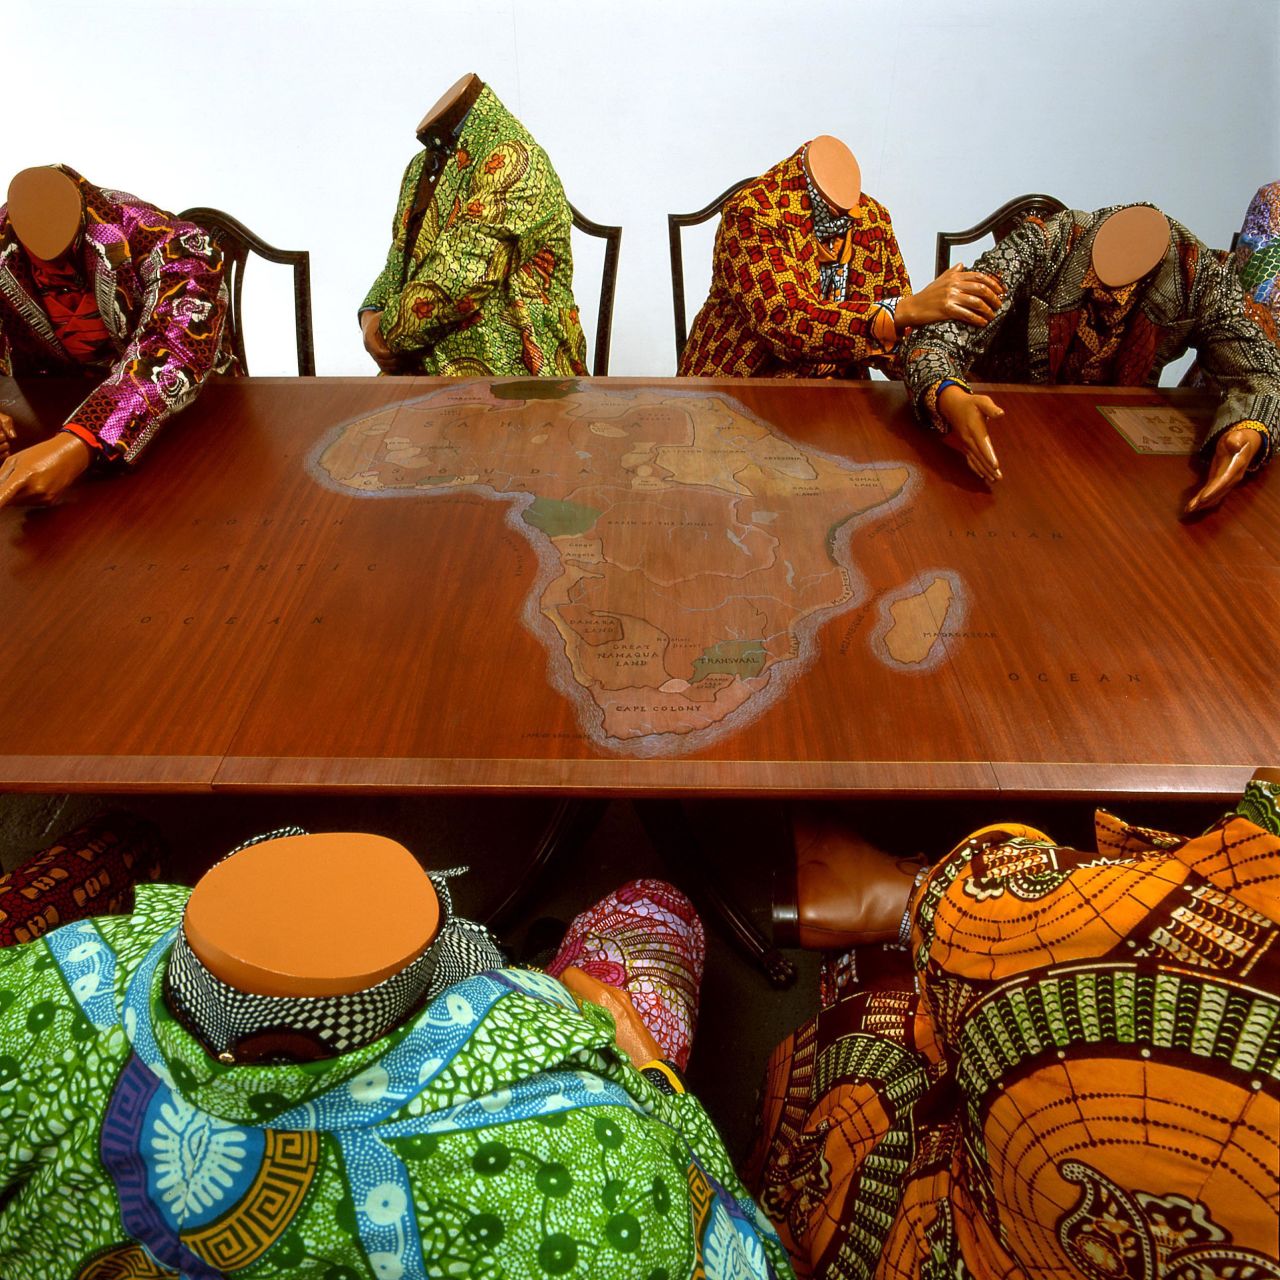 "Scramble for Africa" by Yinka Shonibare, (2003)